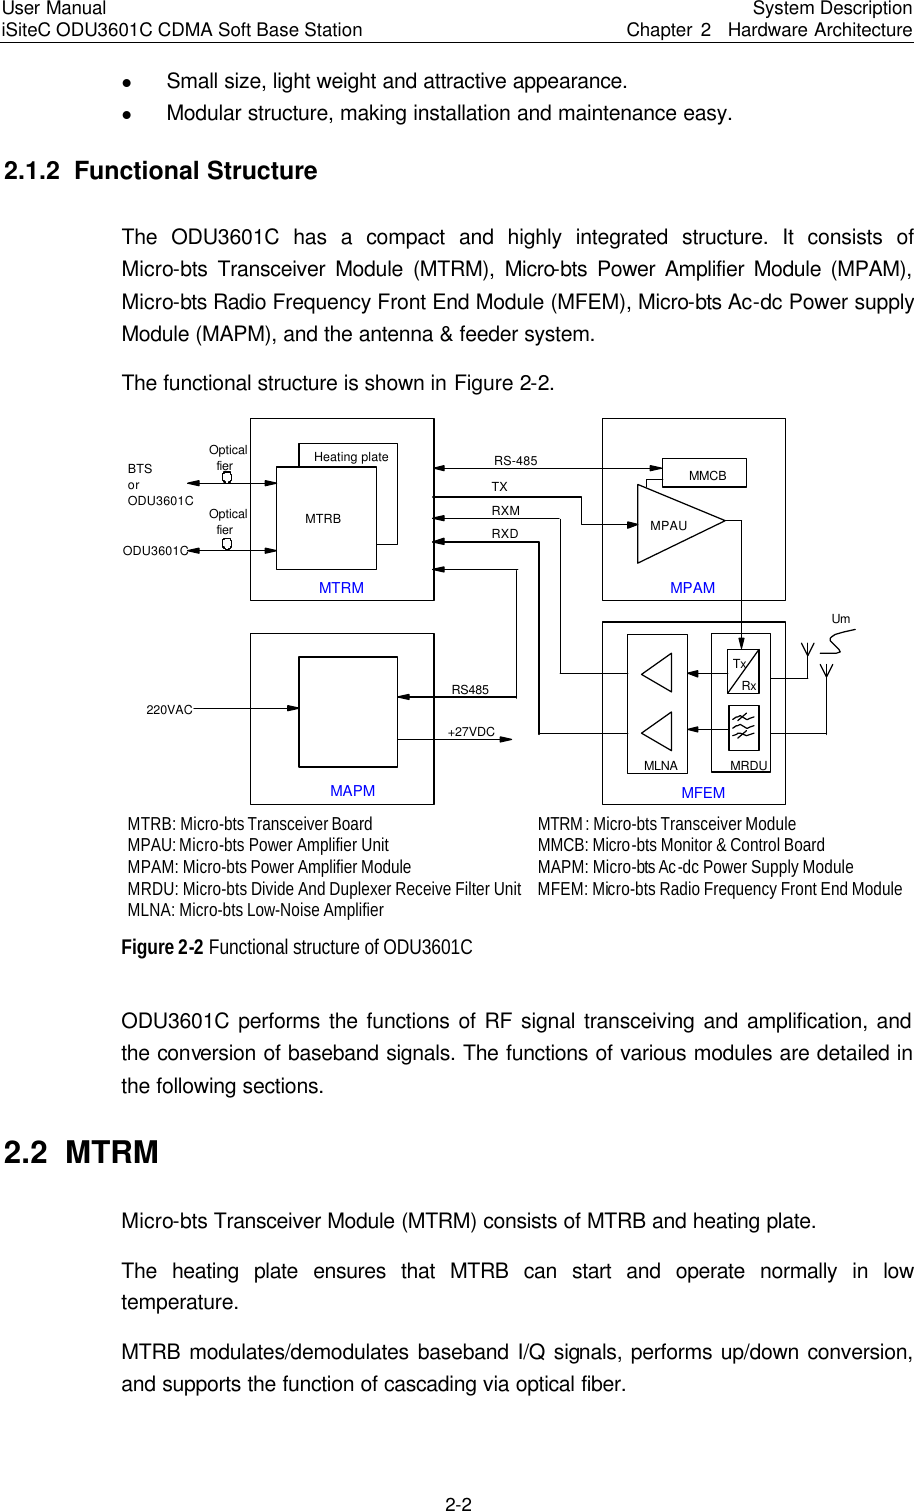 Page 18 of Huawei Technologies ODU3601C-800 CDMA Base Station User Manual 2